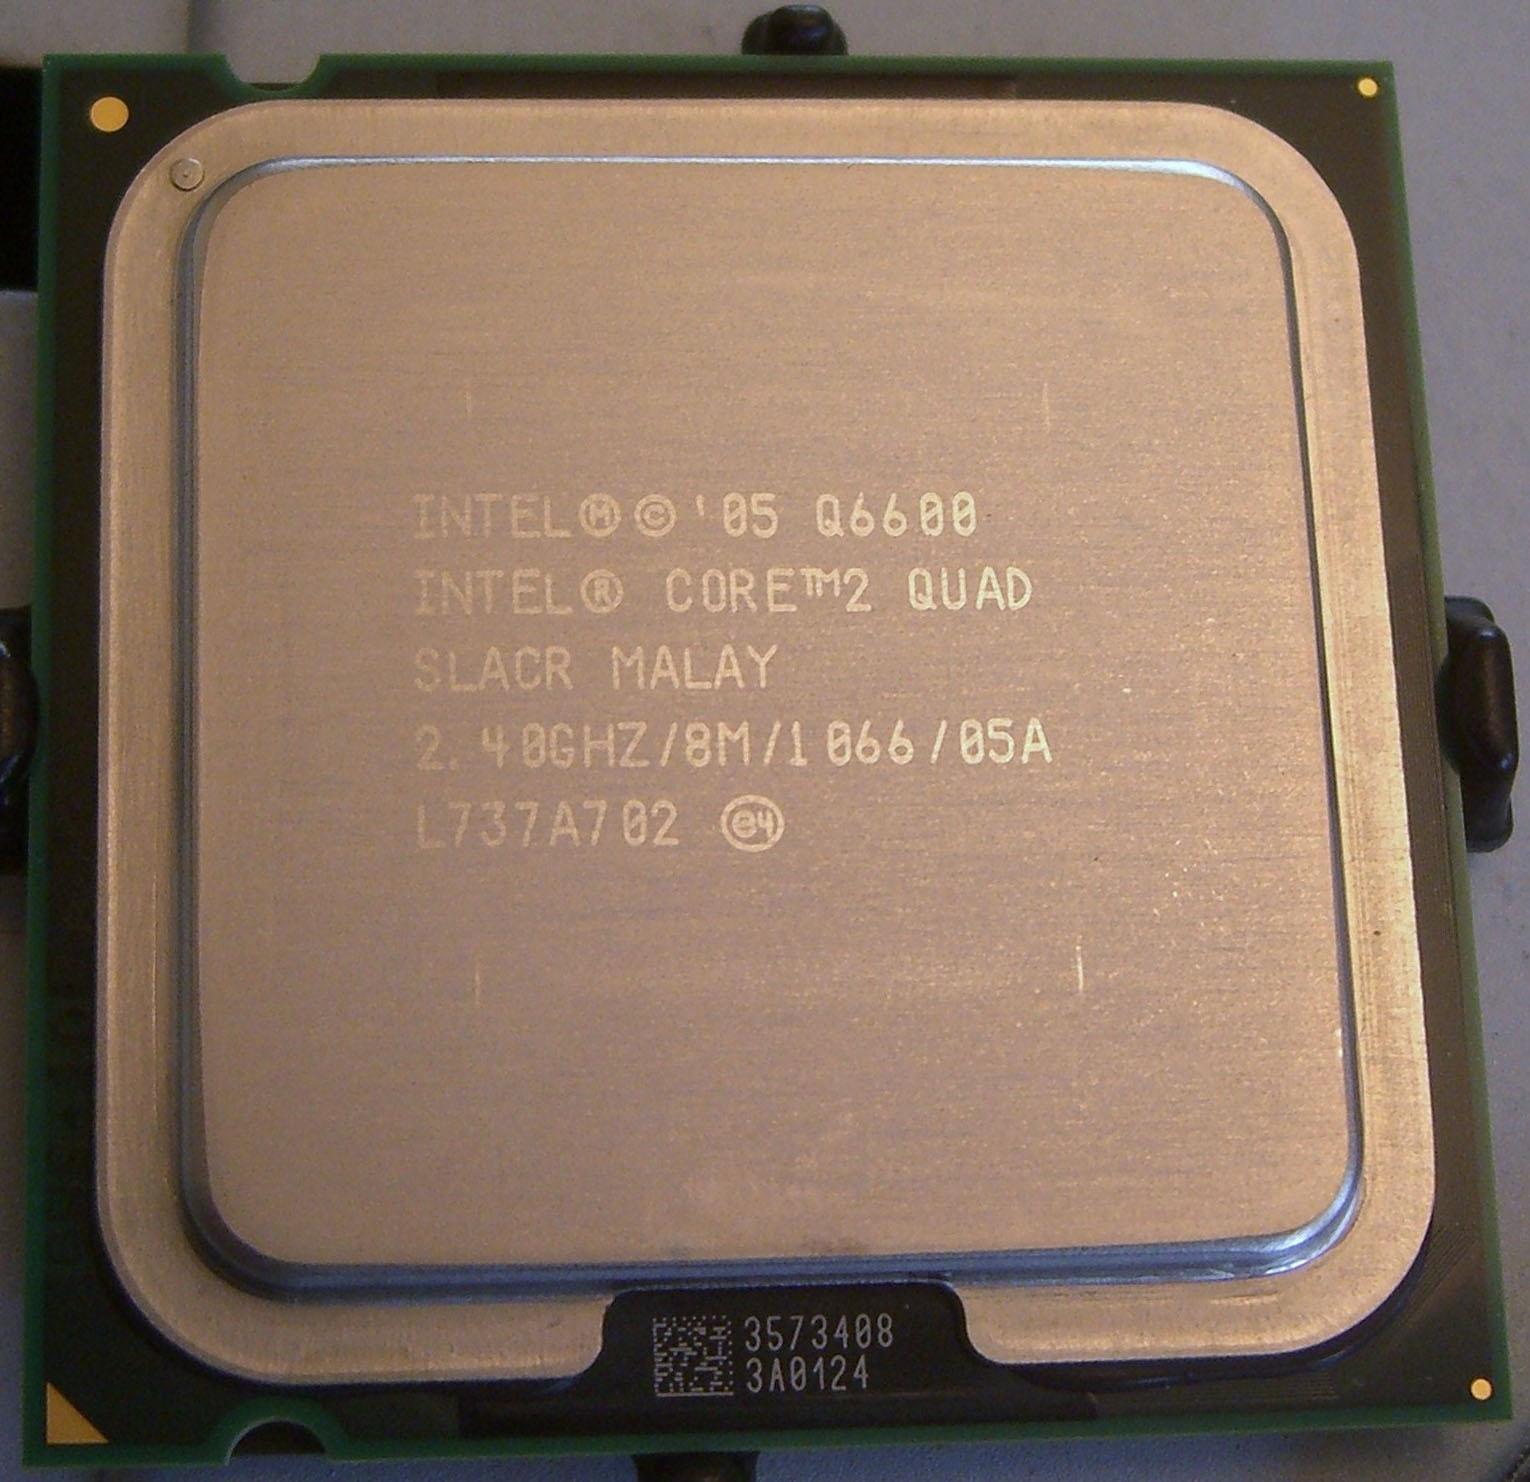 Intel core 2 duo оперативная память. Процессор Intel Core q6600. Процессор Intel Core 2 Quad. Intel Core 2 Quad q6600 ревизия. Intel Core 2 Quad 6600.